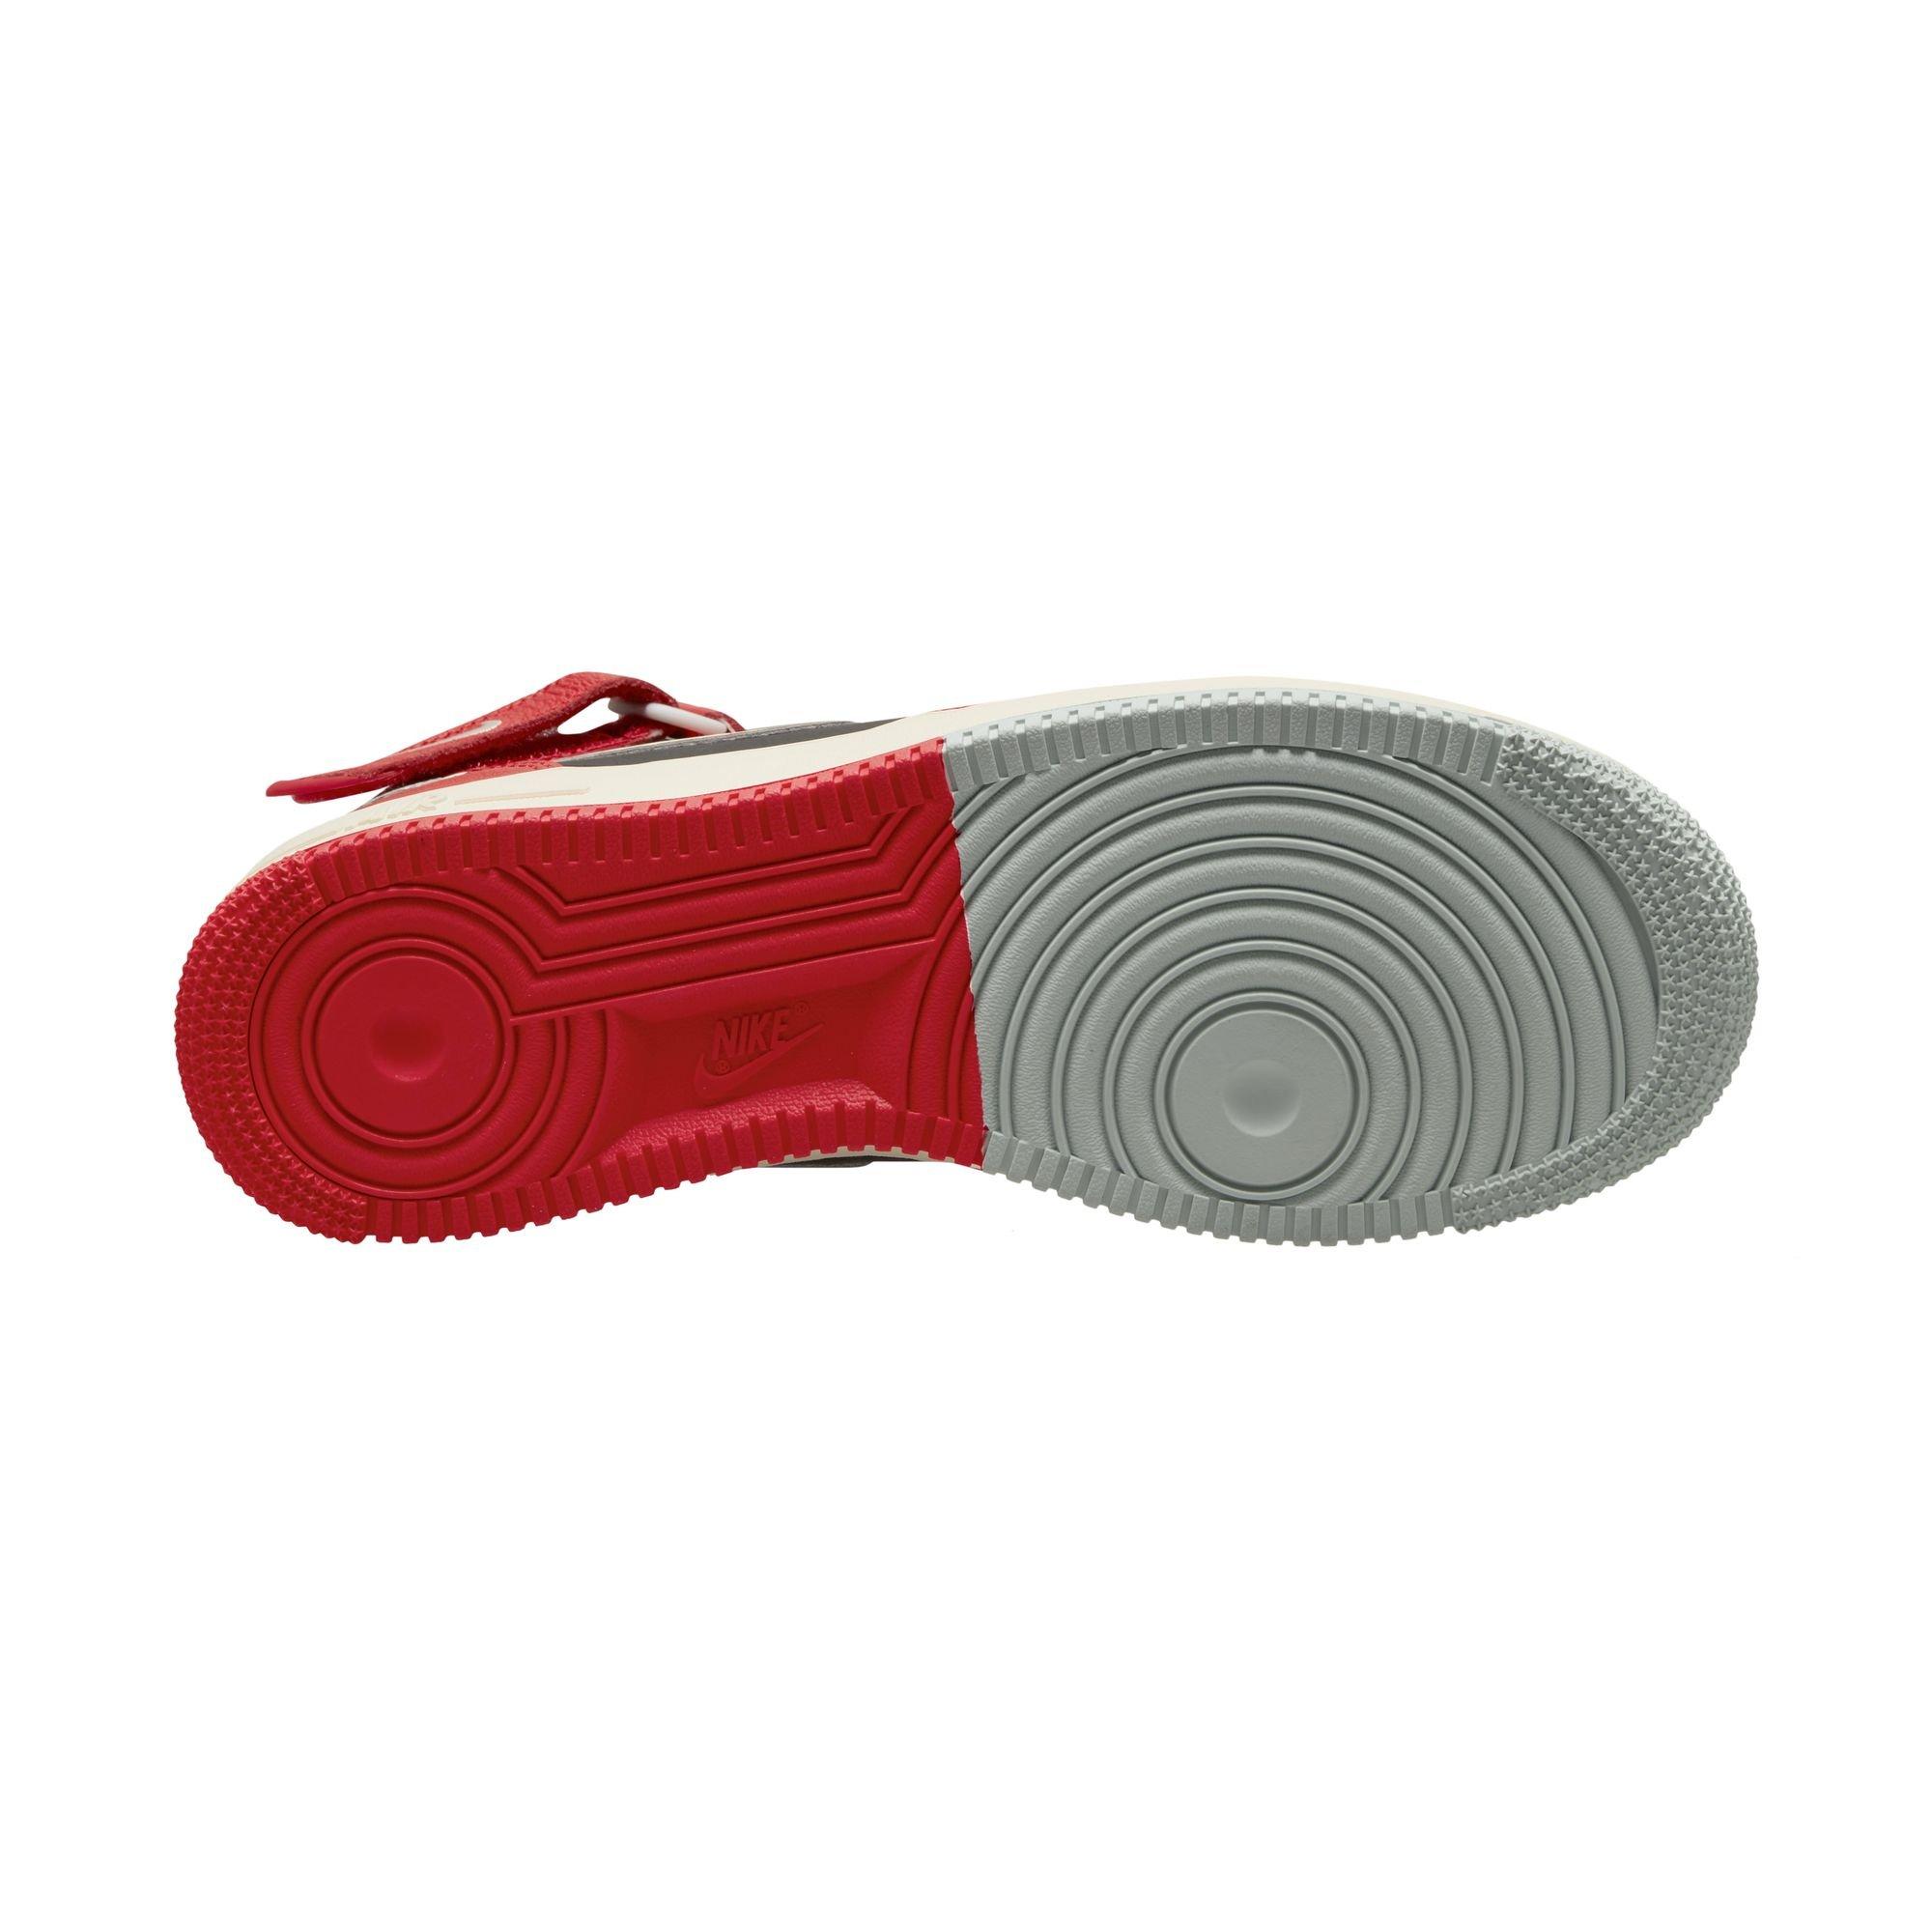 Nike Air Force 1 '07 Picante Red/White Men's Shoe - Hibbett